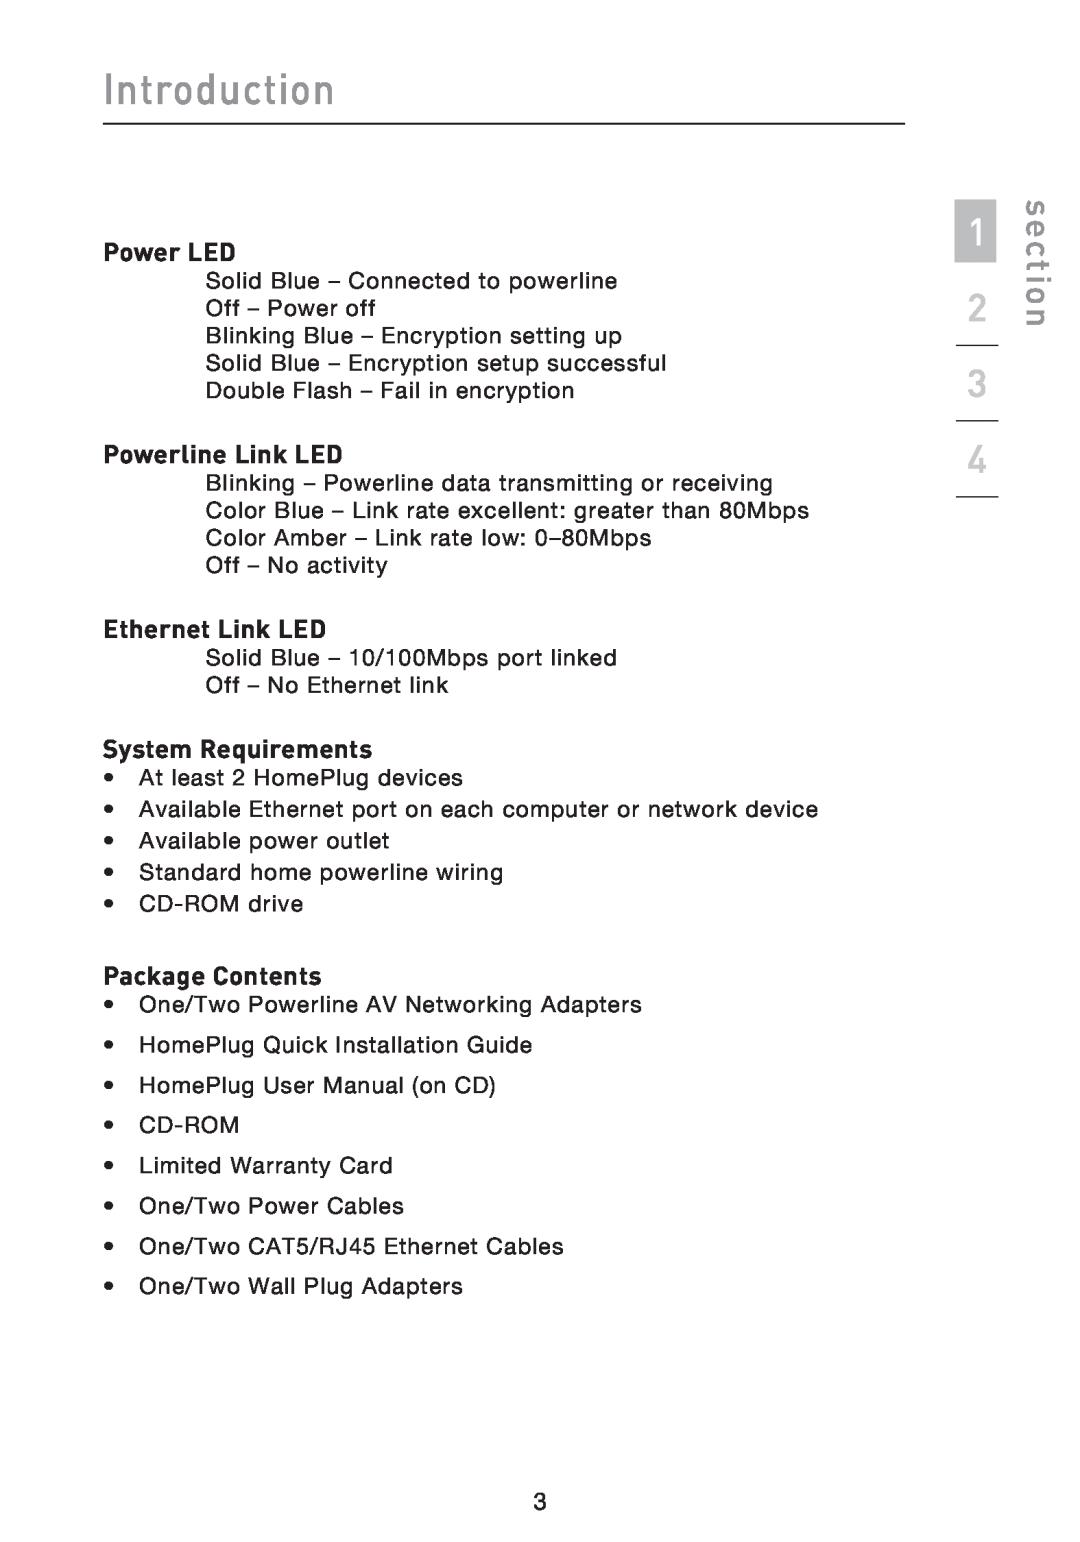 Belkin F5D4074 user manual Introduction, section, Power LED, Powerline Link LED, Ethernet Link LED, System Requirements 